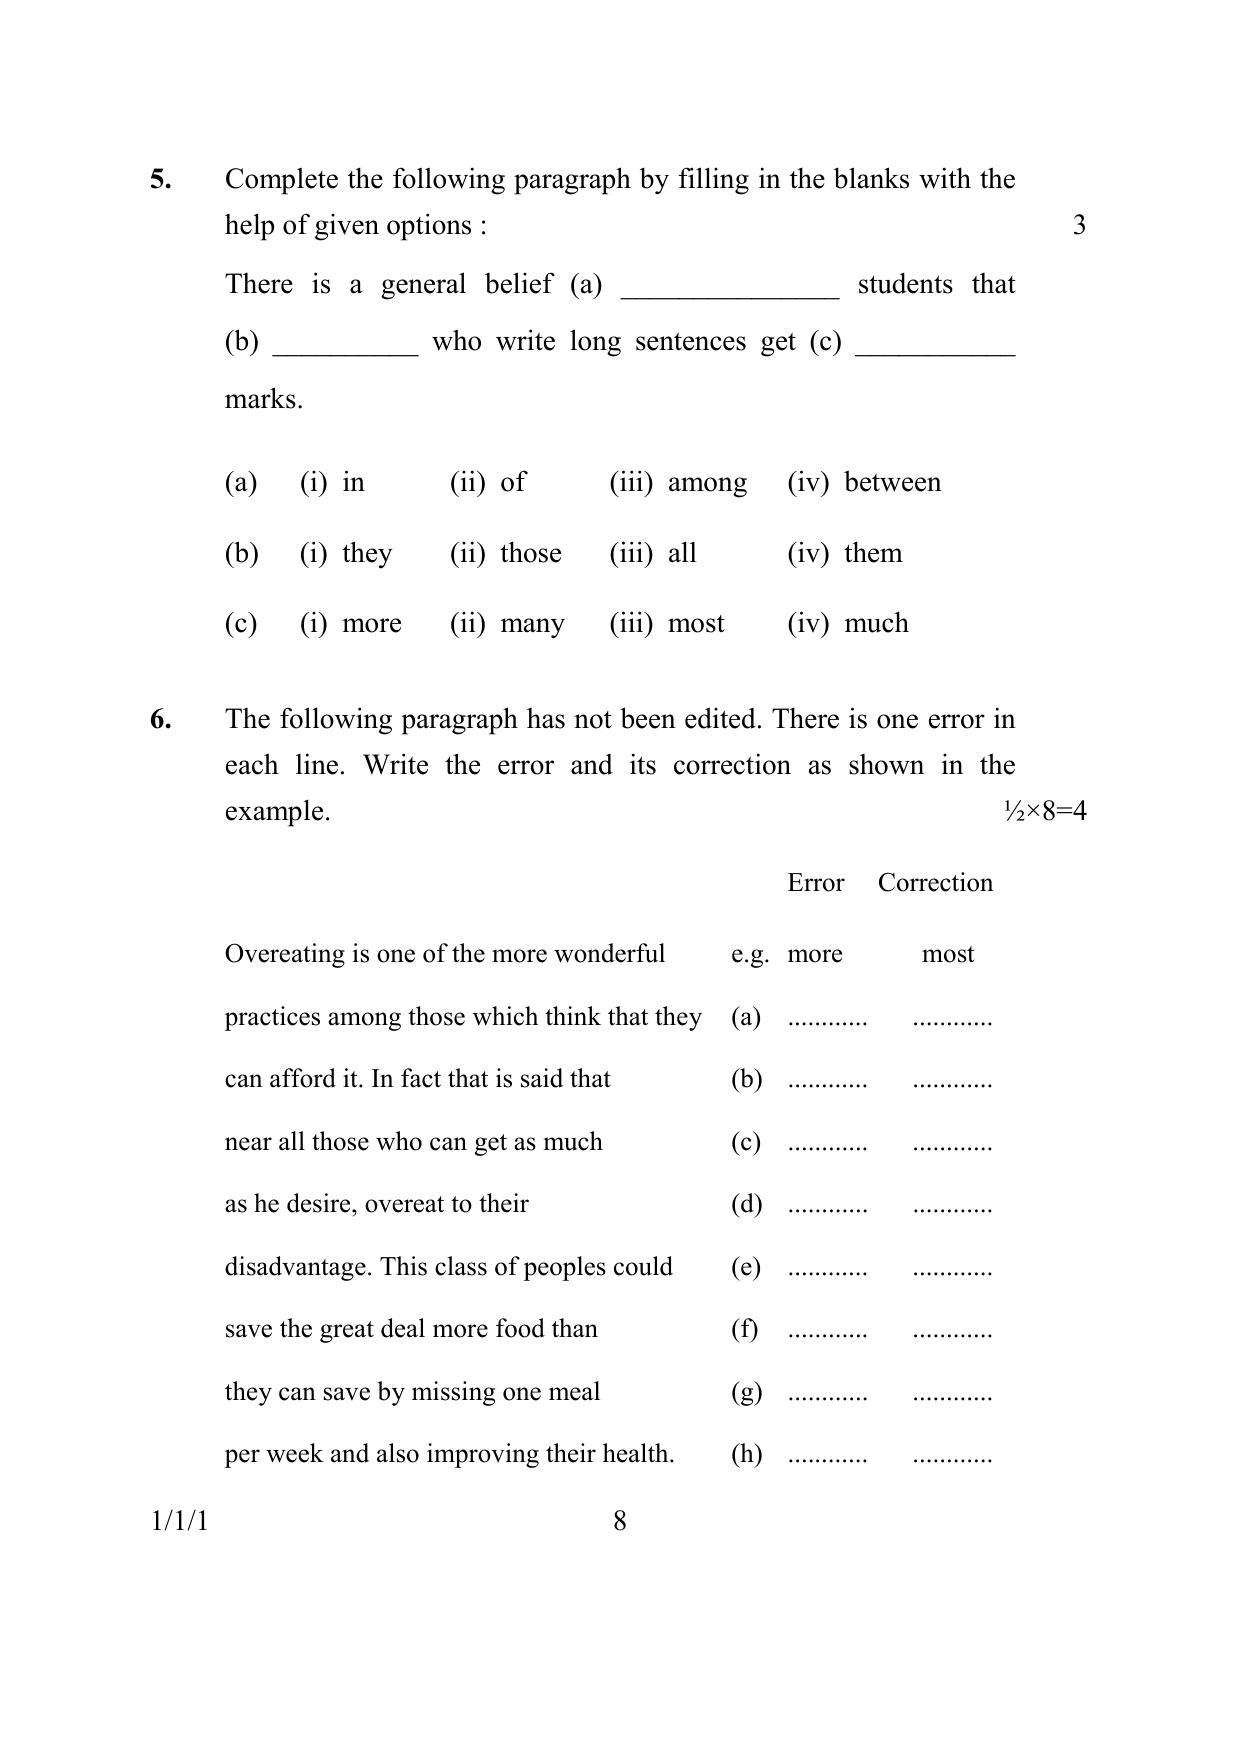 CBSE Class 10 1-1-1 ENGLISH COMMUNICATIVE 2016 Question Paper - Page 8